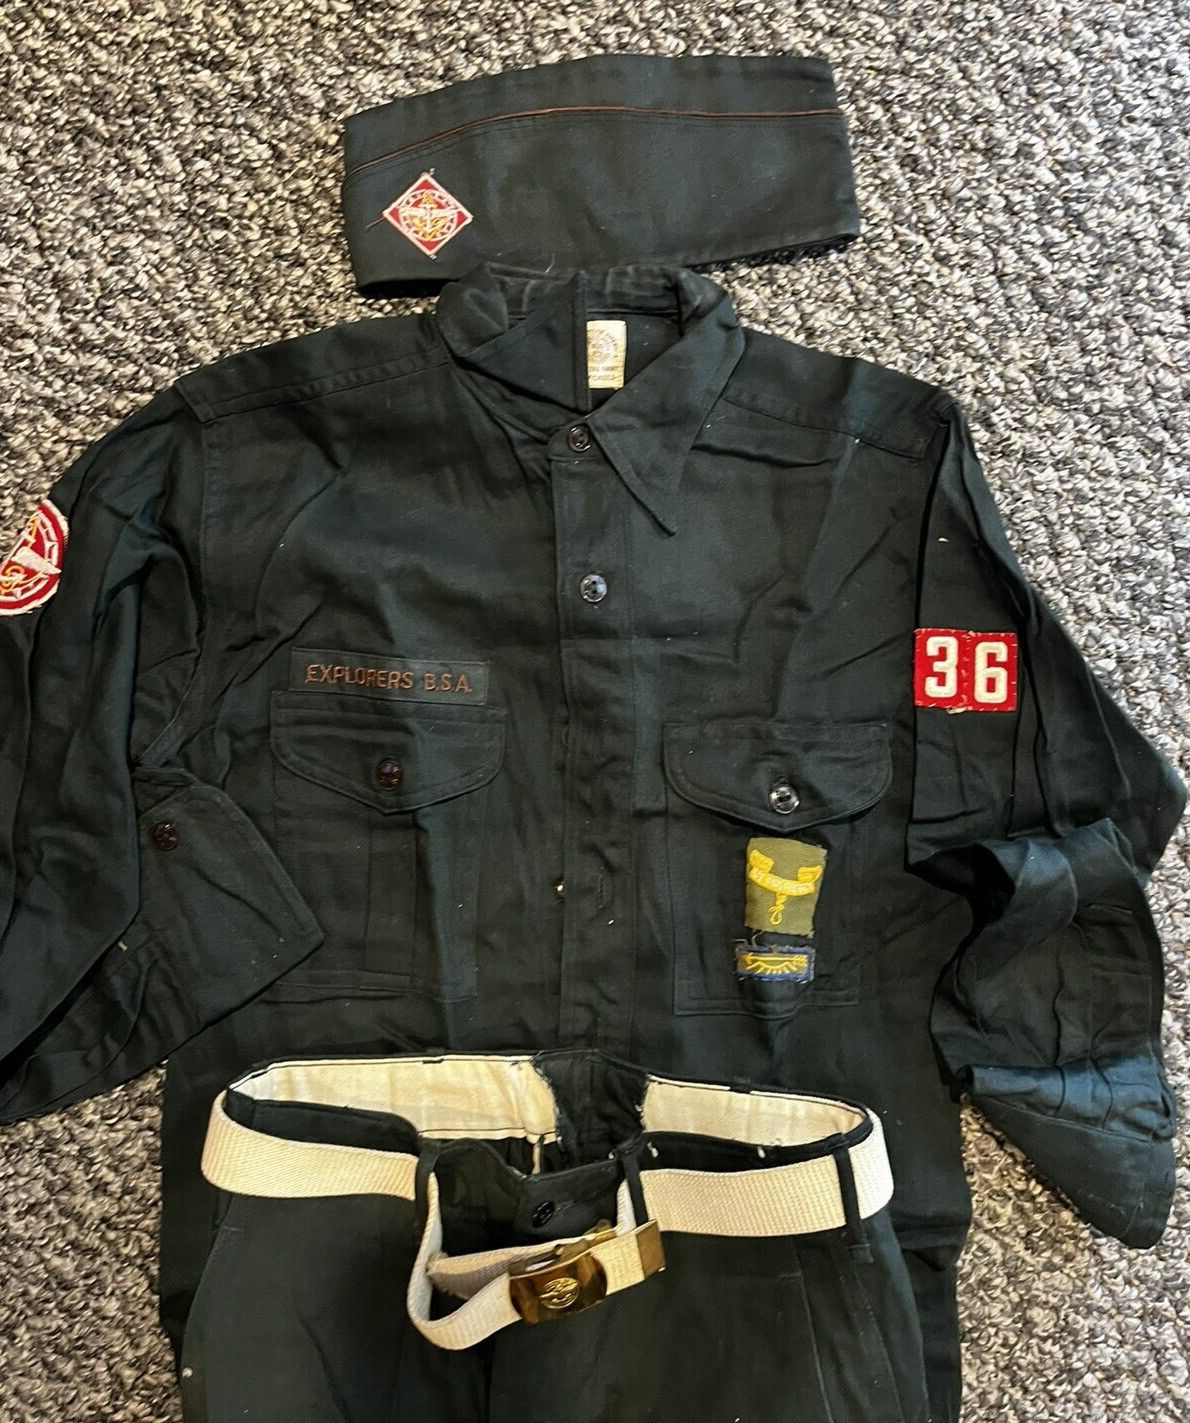 Explorer Scout Uniform 1940s 50\'s Shirt Pants Belt & Hat With Embroidered Patch